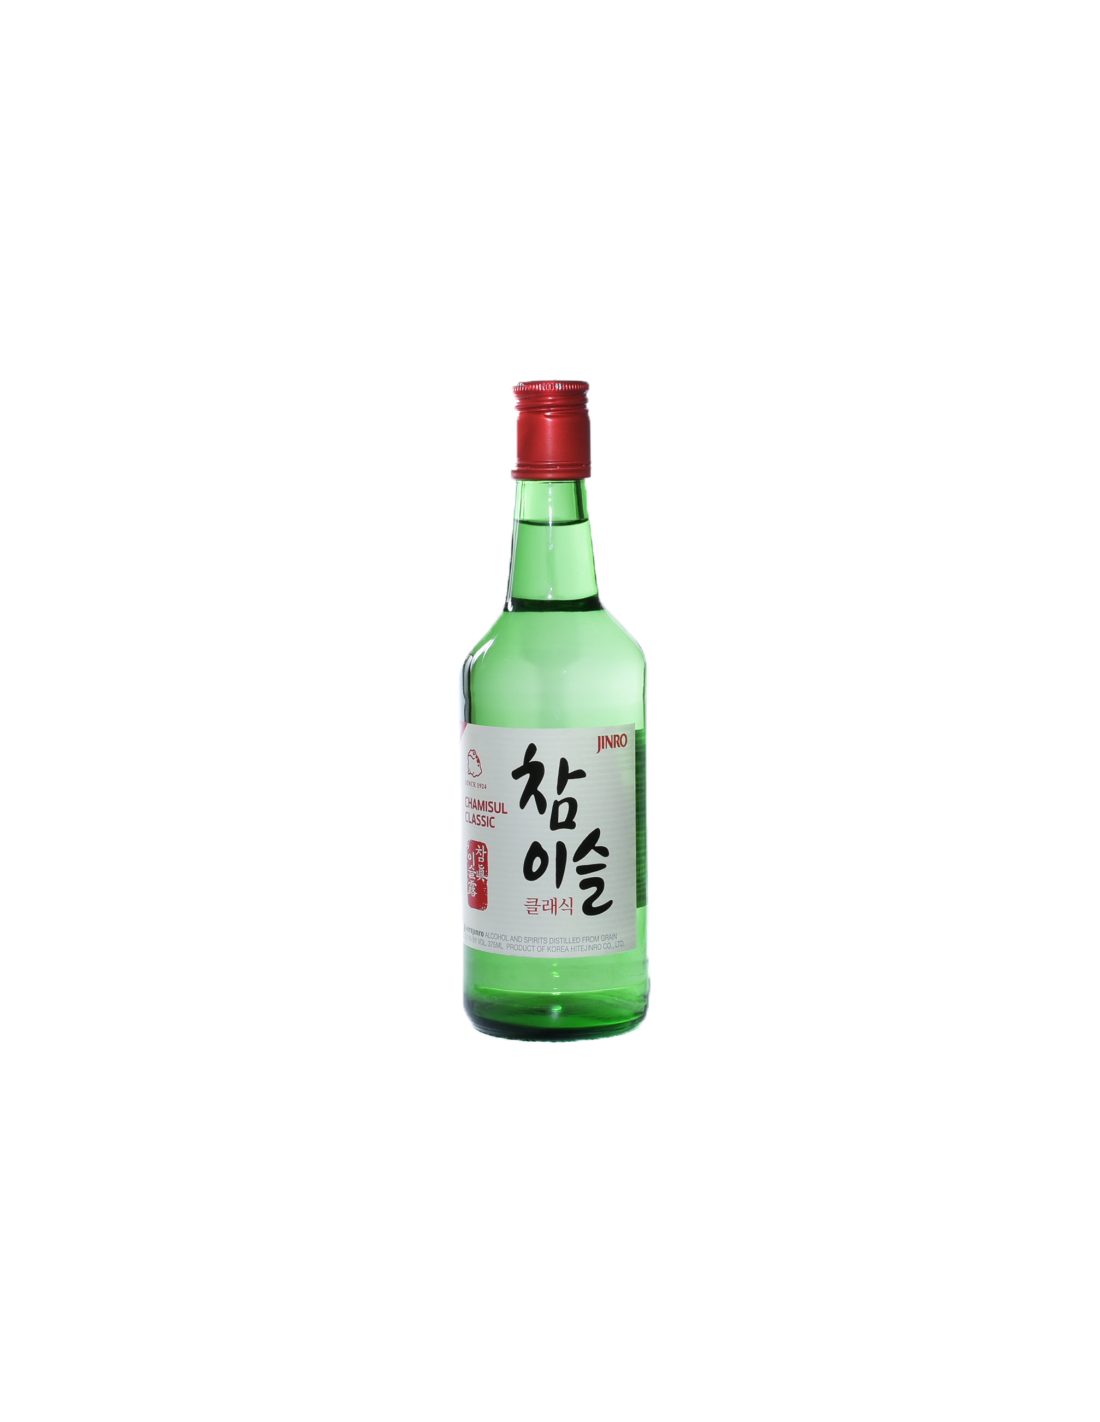 Bautura traditionala Jinro Soju Chamisul Original, 20.1% alc., 0.36L, Coreea alcooldiscount.ro